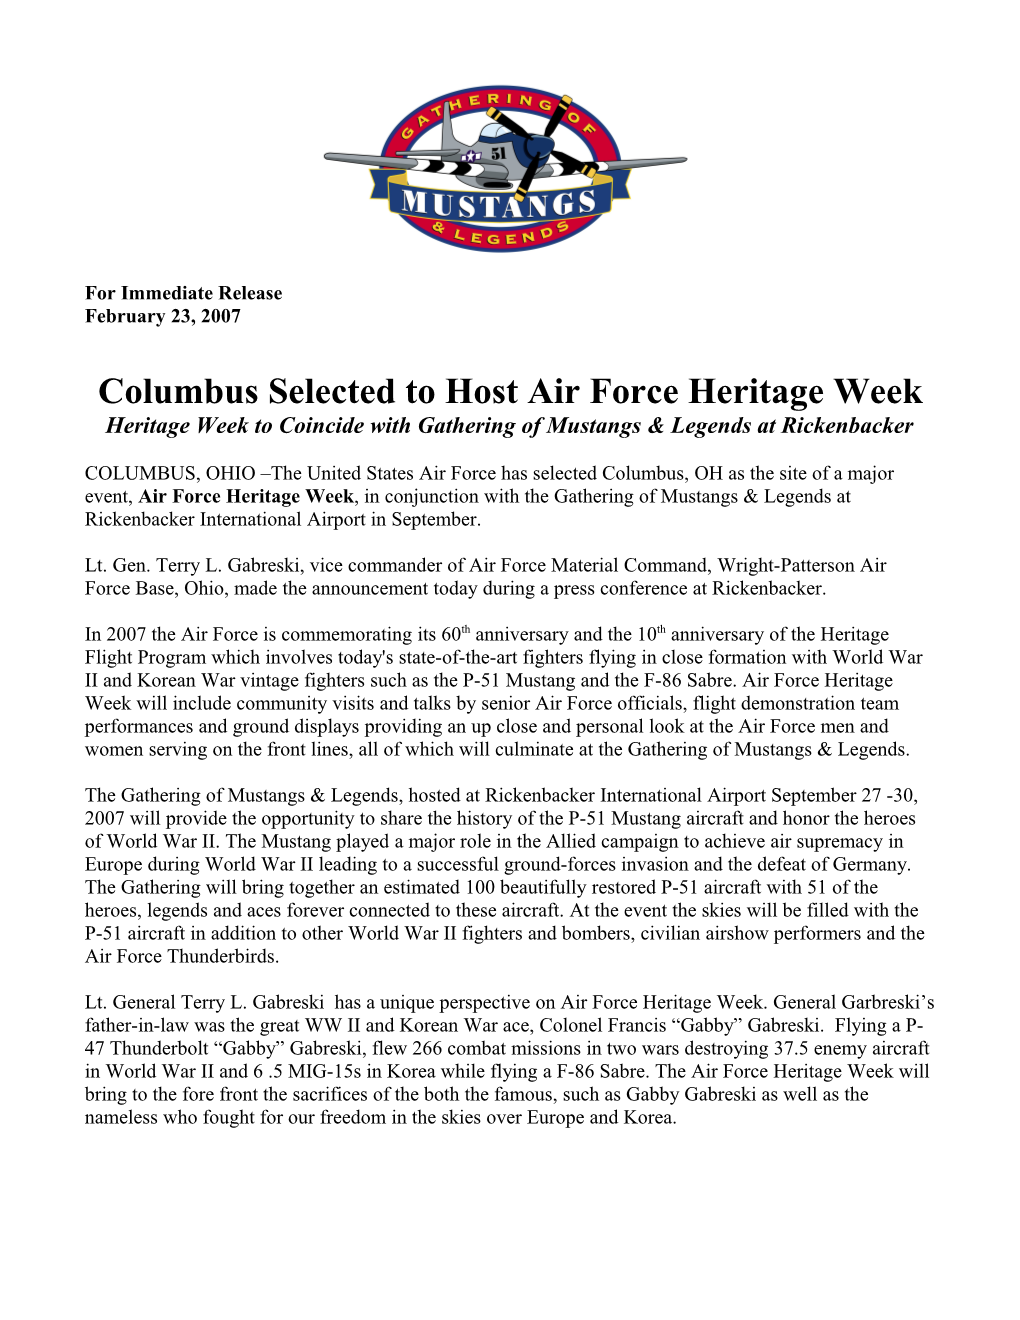 Columbus Selected to Host Air Force Heritage Week